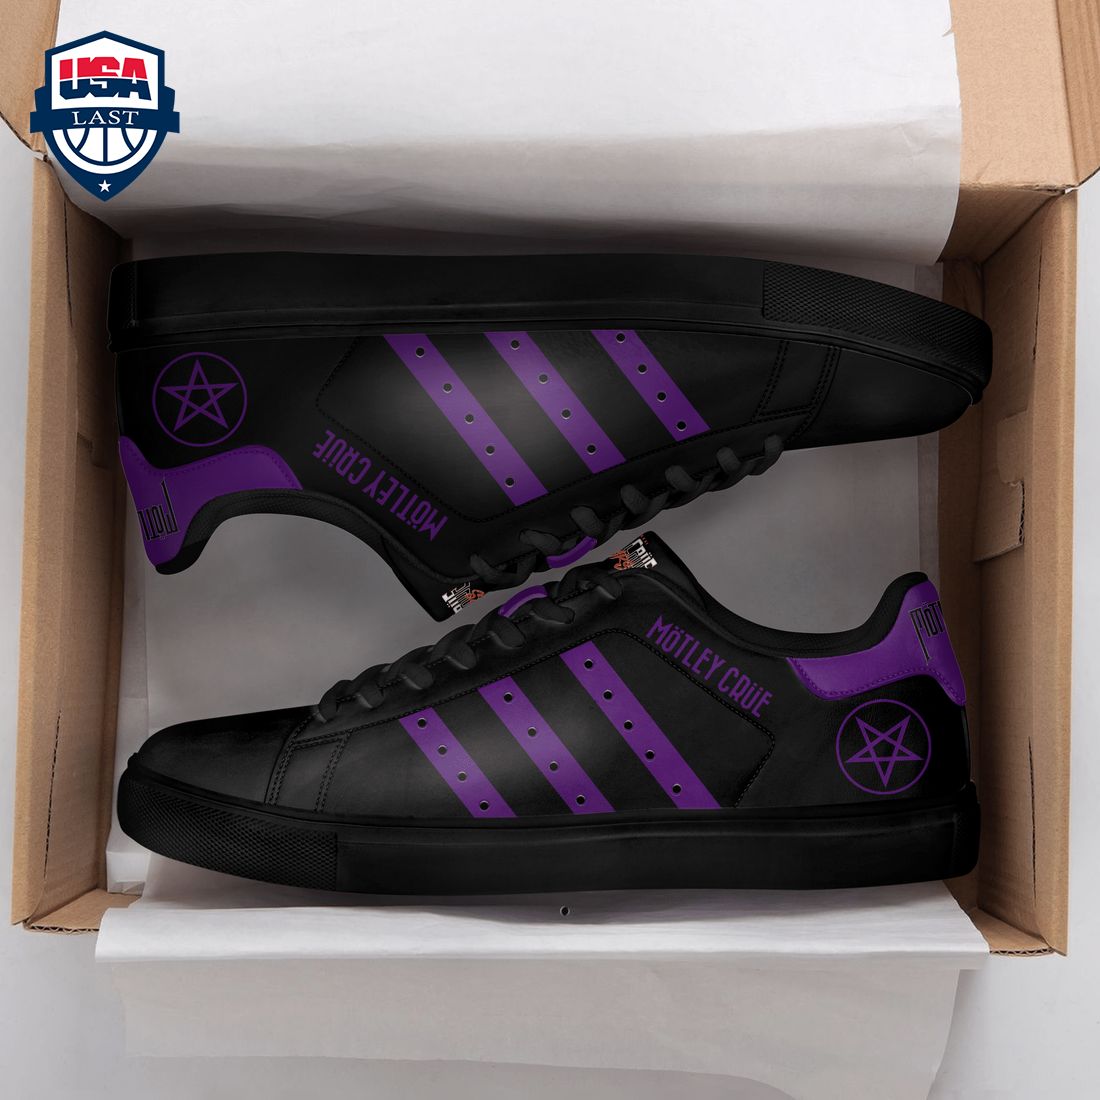 motley-crue-purple-stripes-style-1-stan-smith-low-top-shoes-1-CEoei.jpg